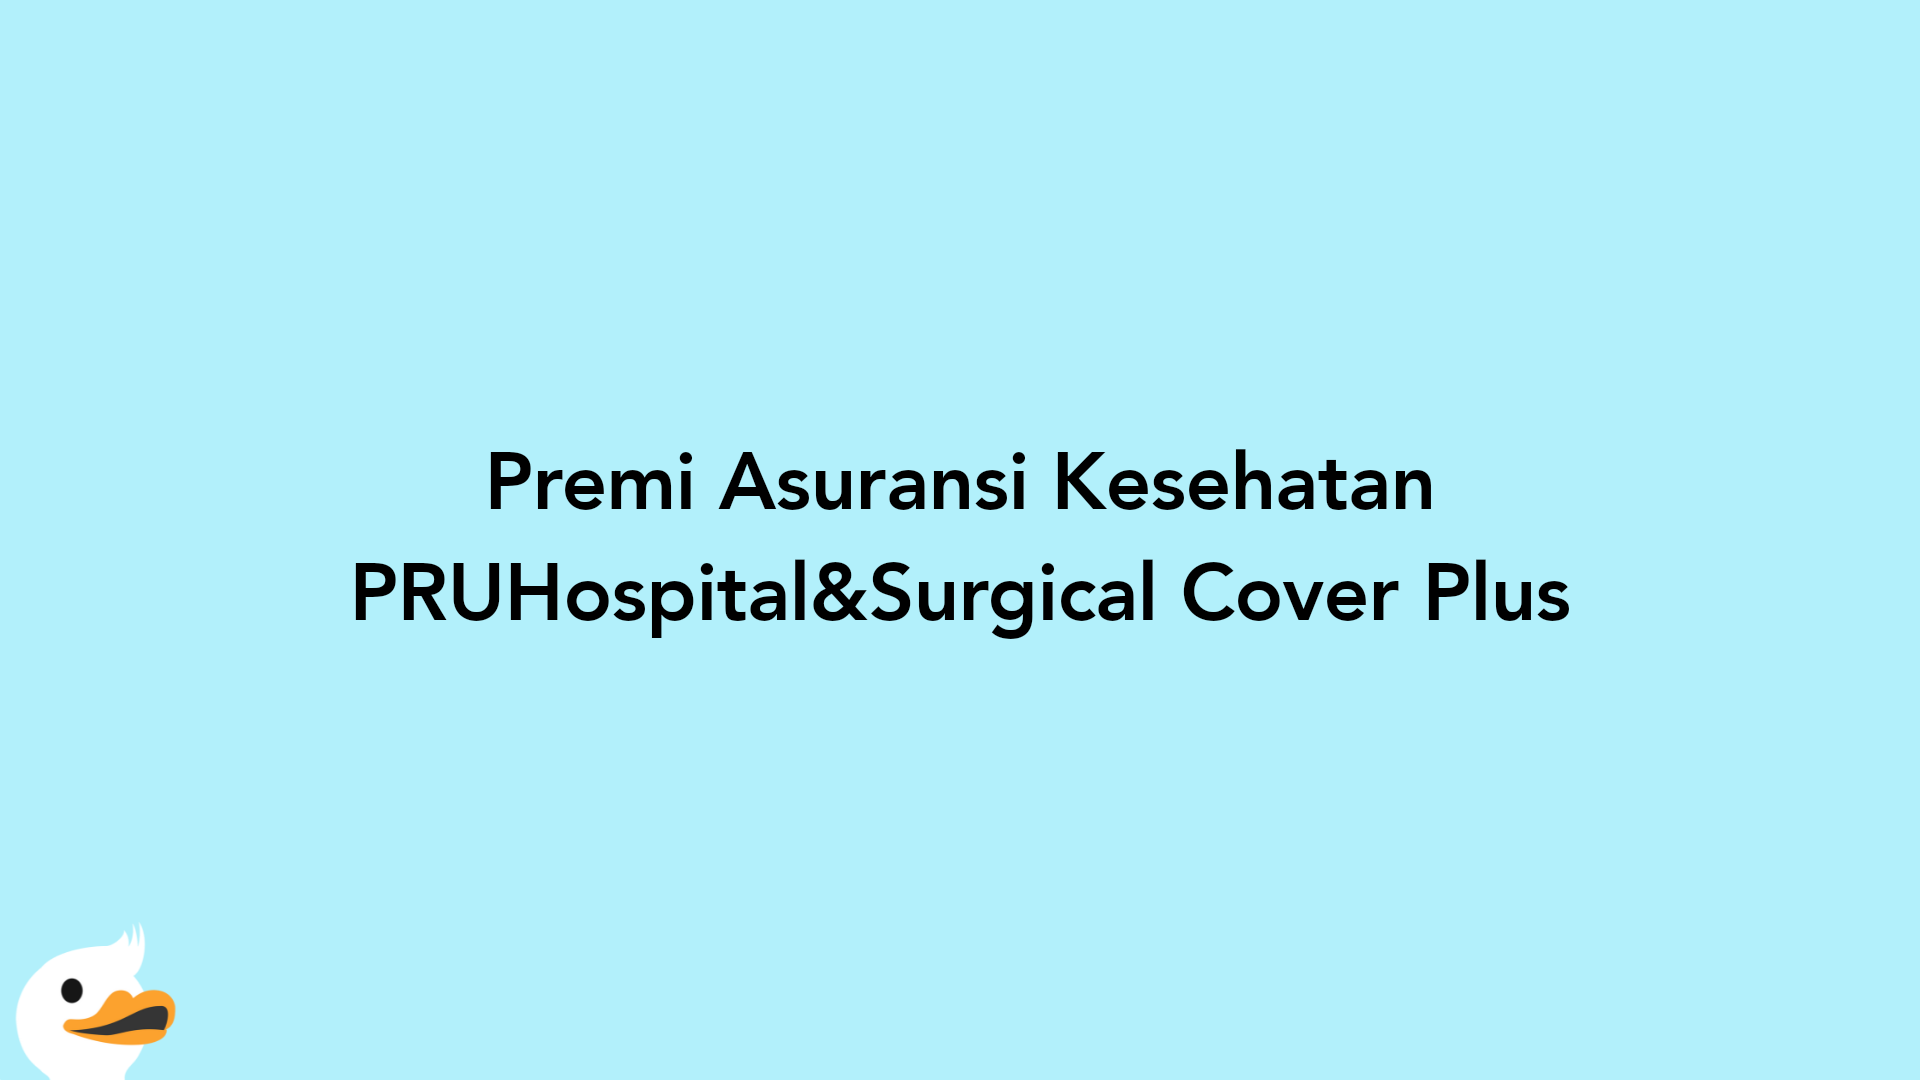 Premi Asuransi Kesehatan PRUHospital&Surgical Cover Plus